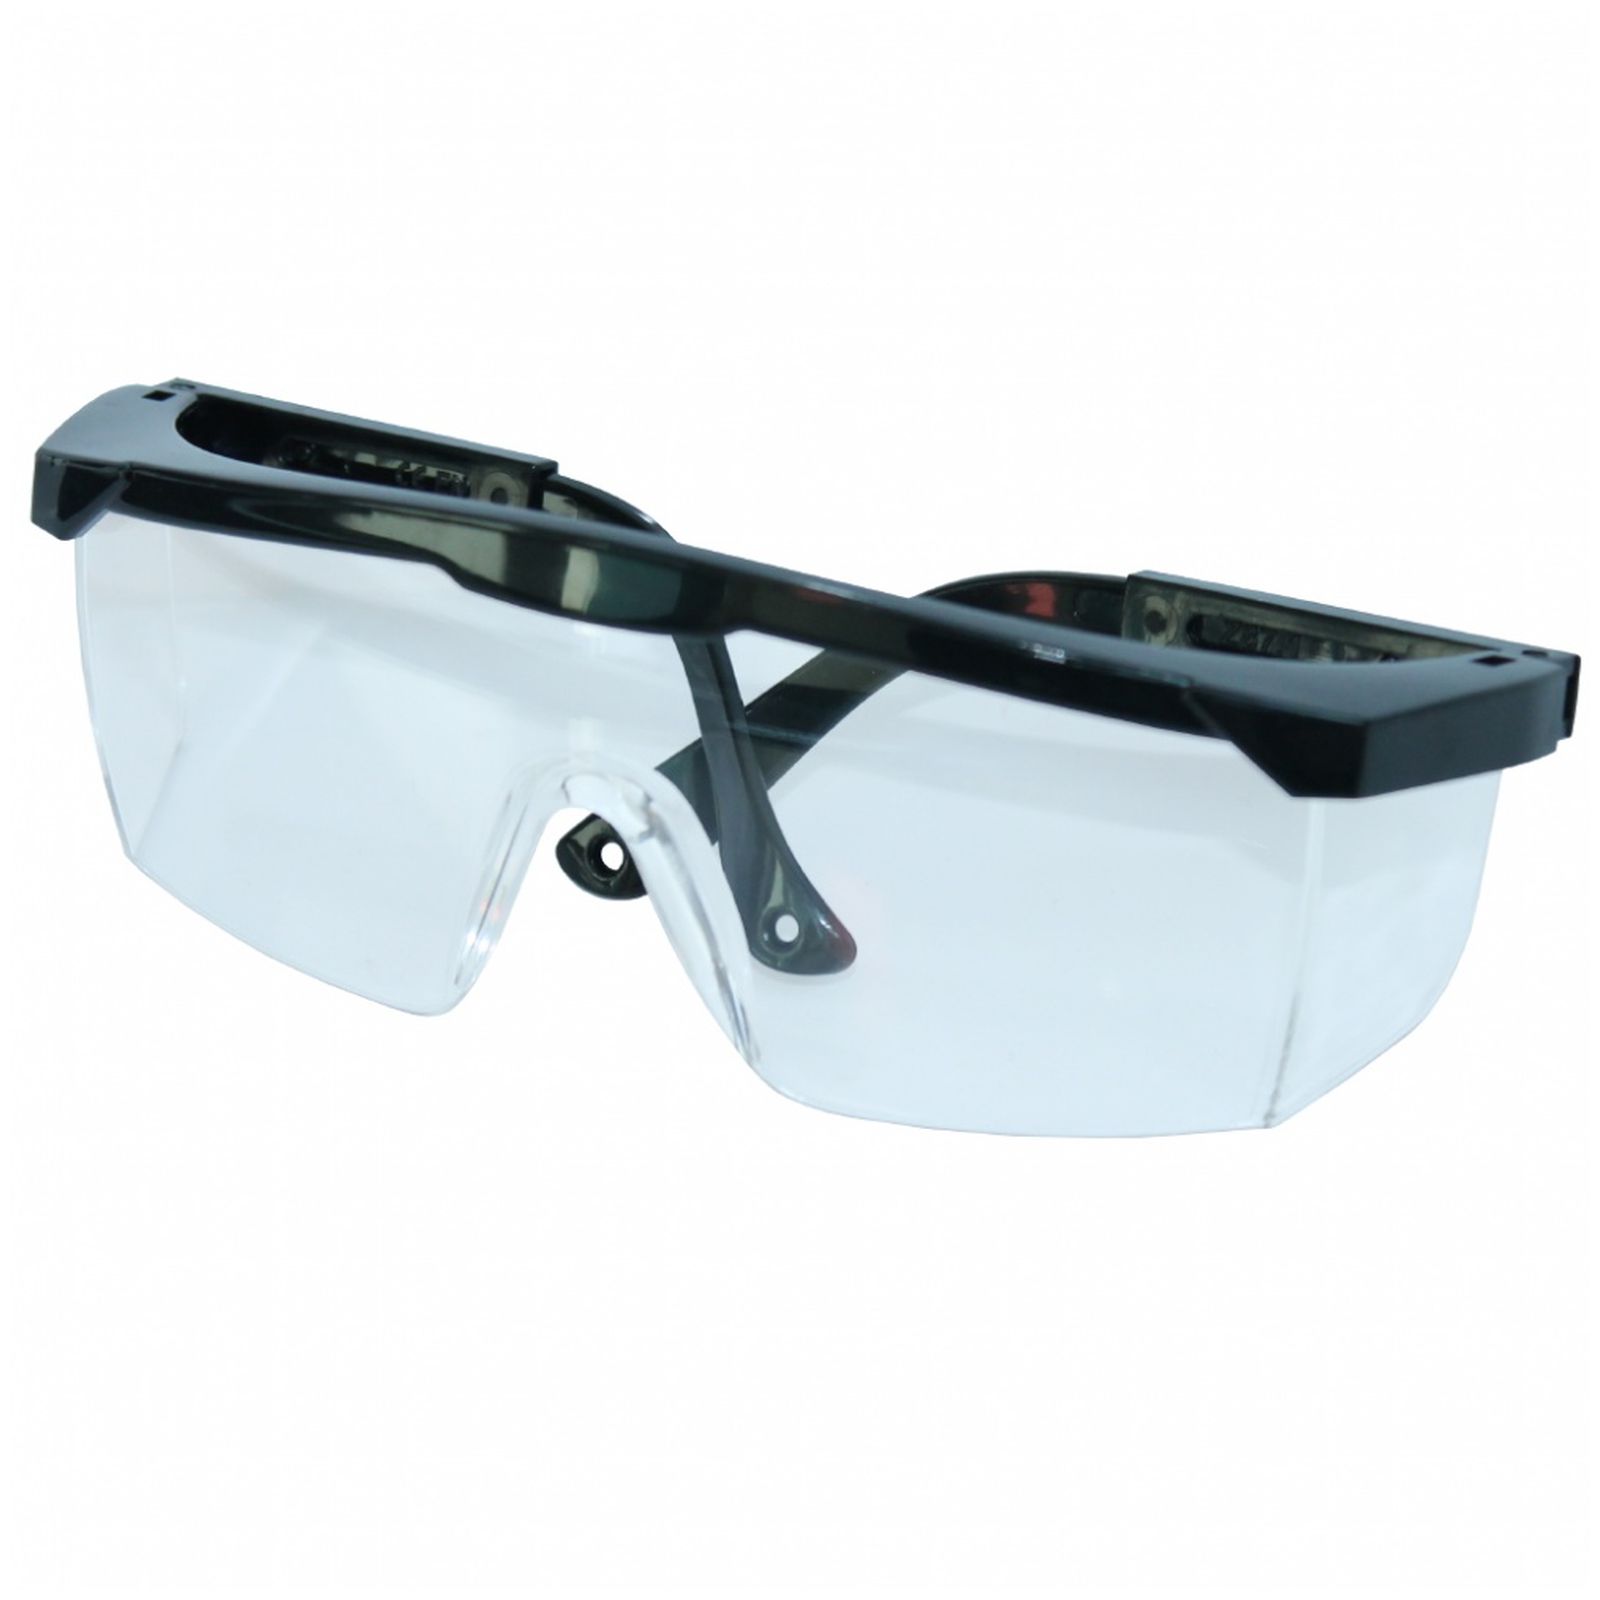 Sp Tools Clear Lens Safety Glasses Spr80 Shop Online Now At Ambler